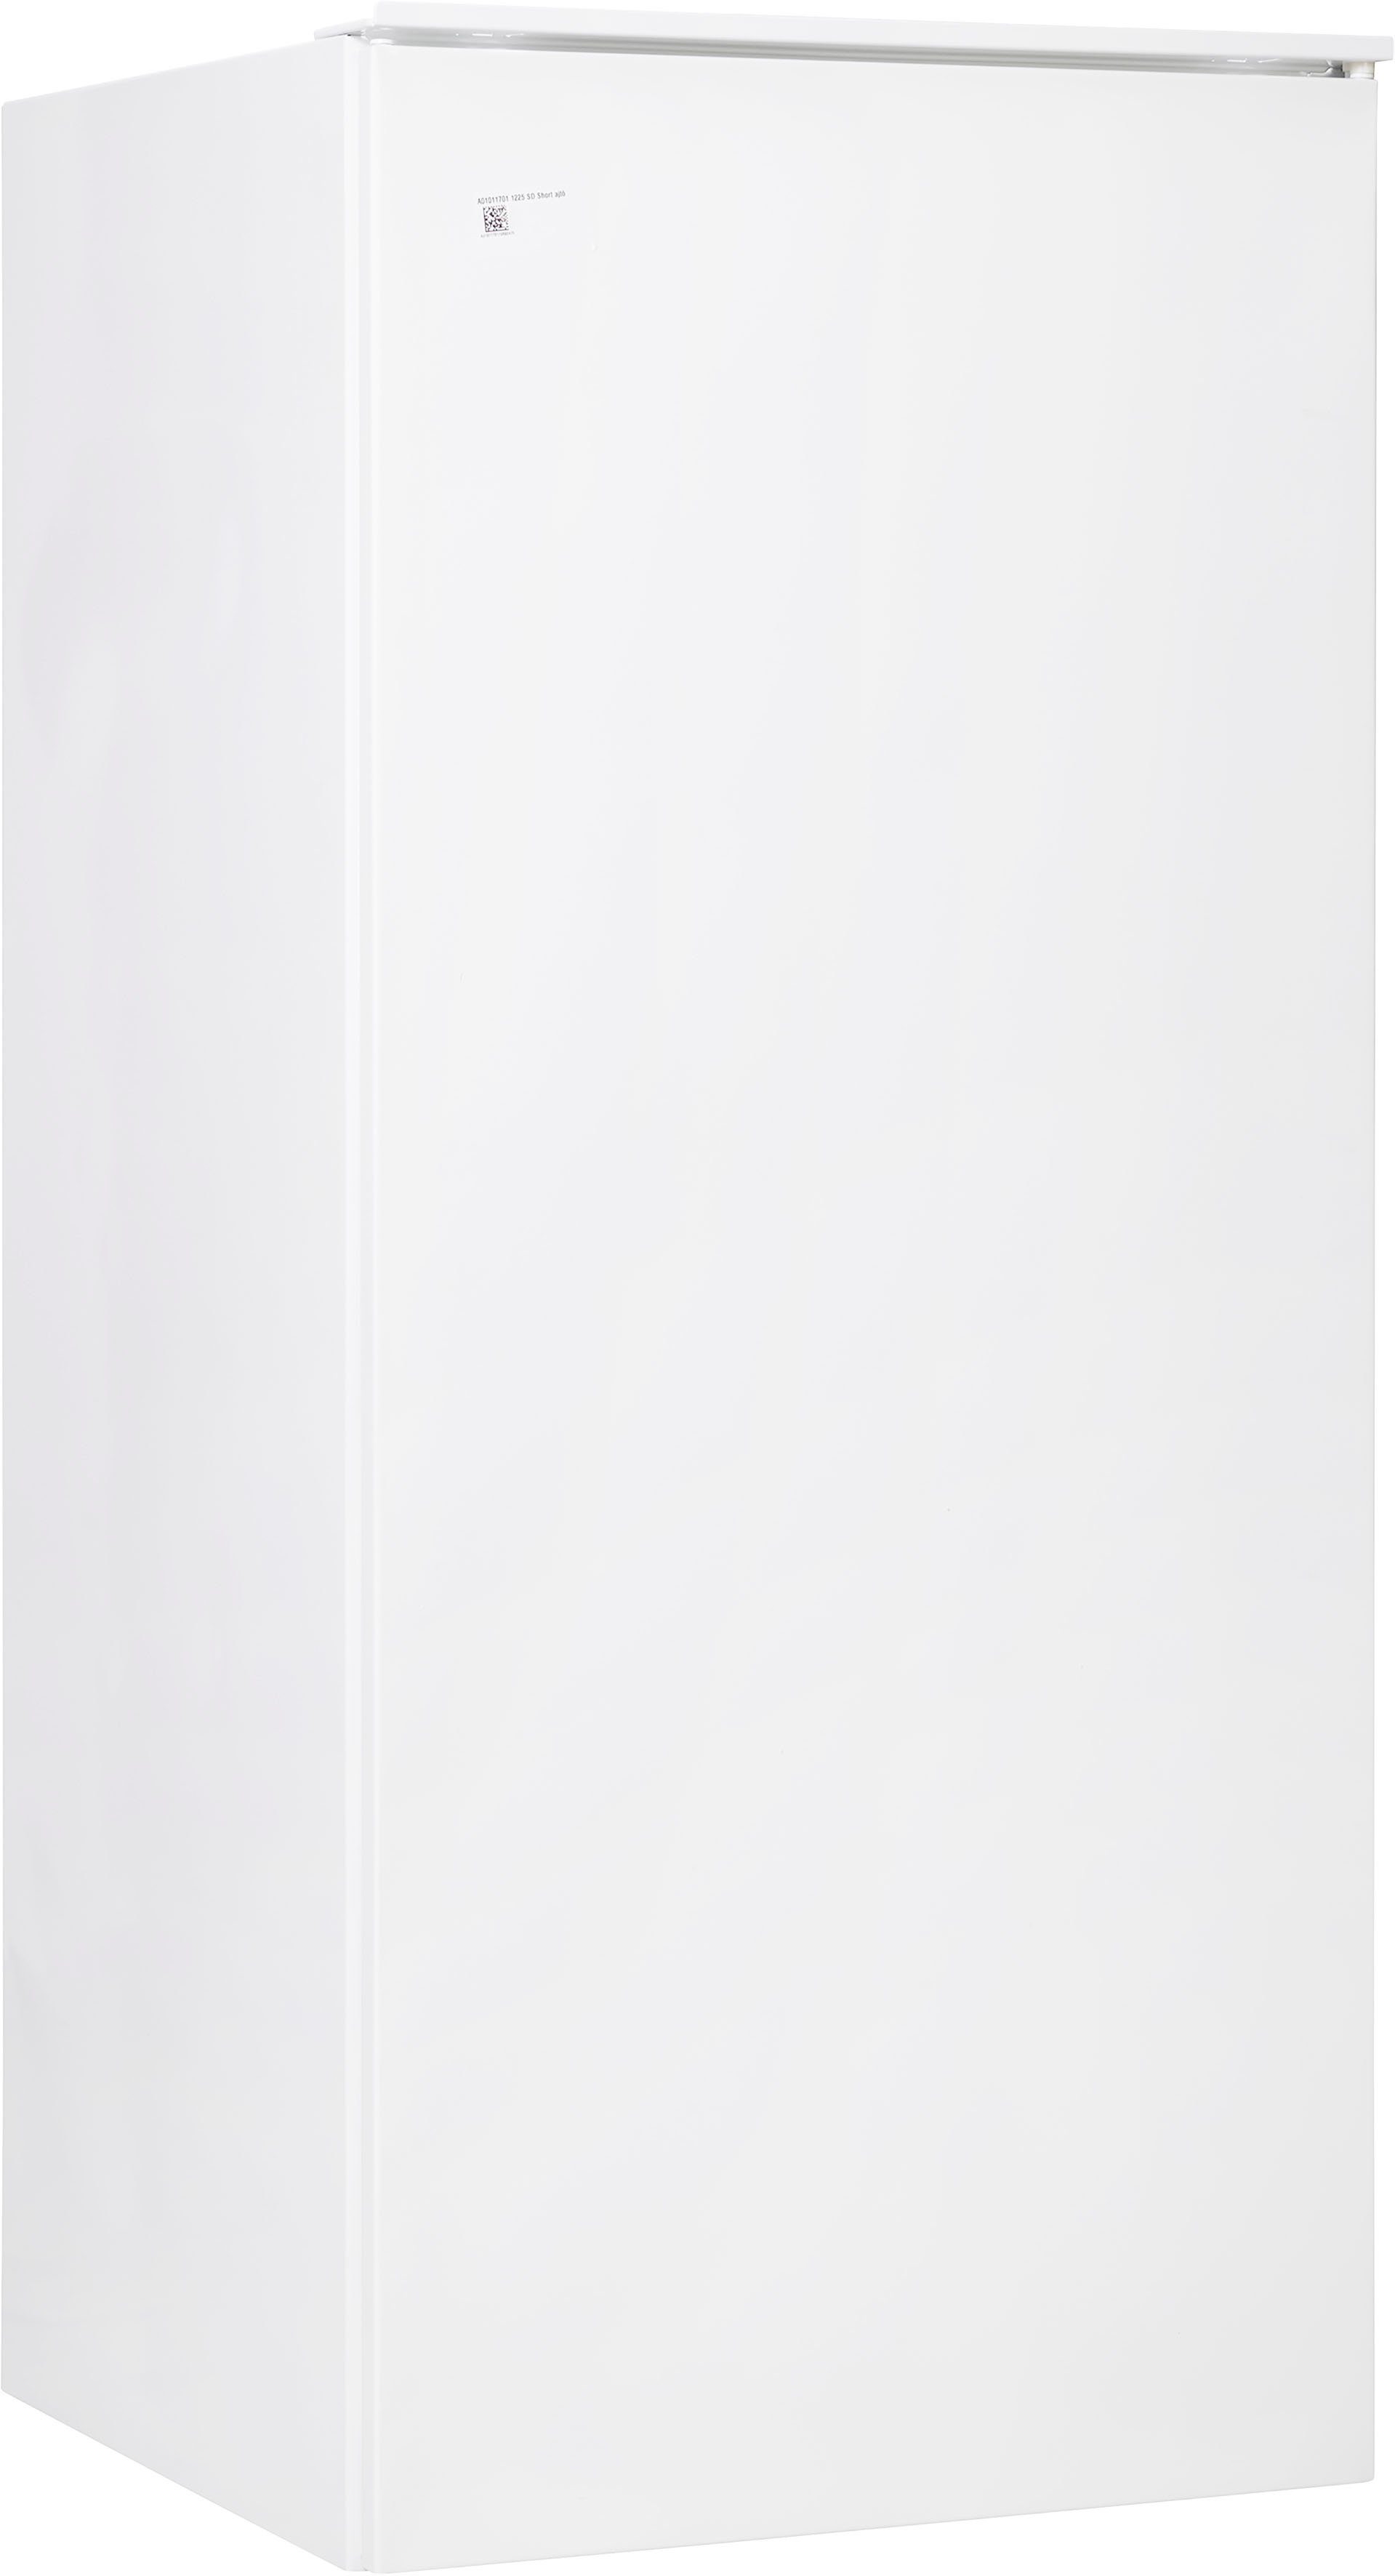 AEG Einbaukühlschrank SFE712FAAS, 121,8 cm 54,8 cm hoch, breit